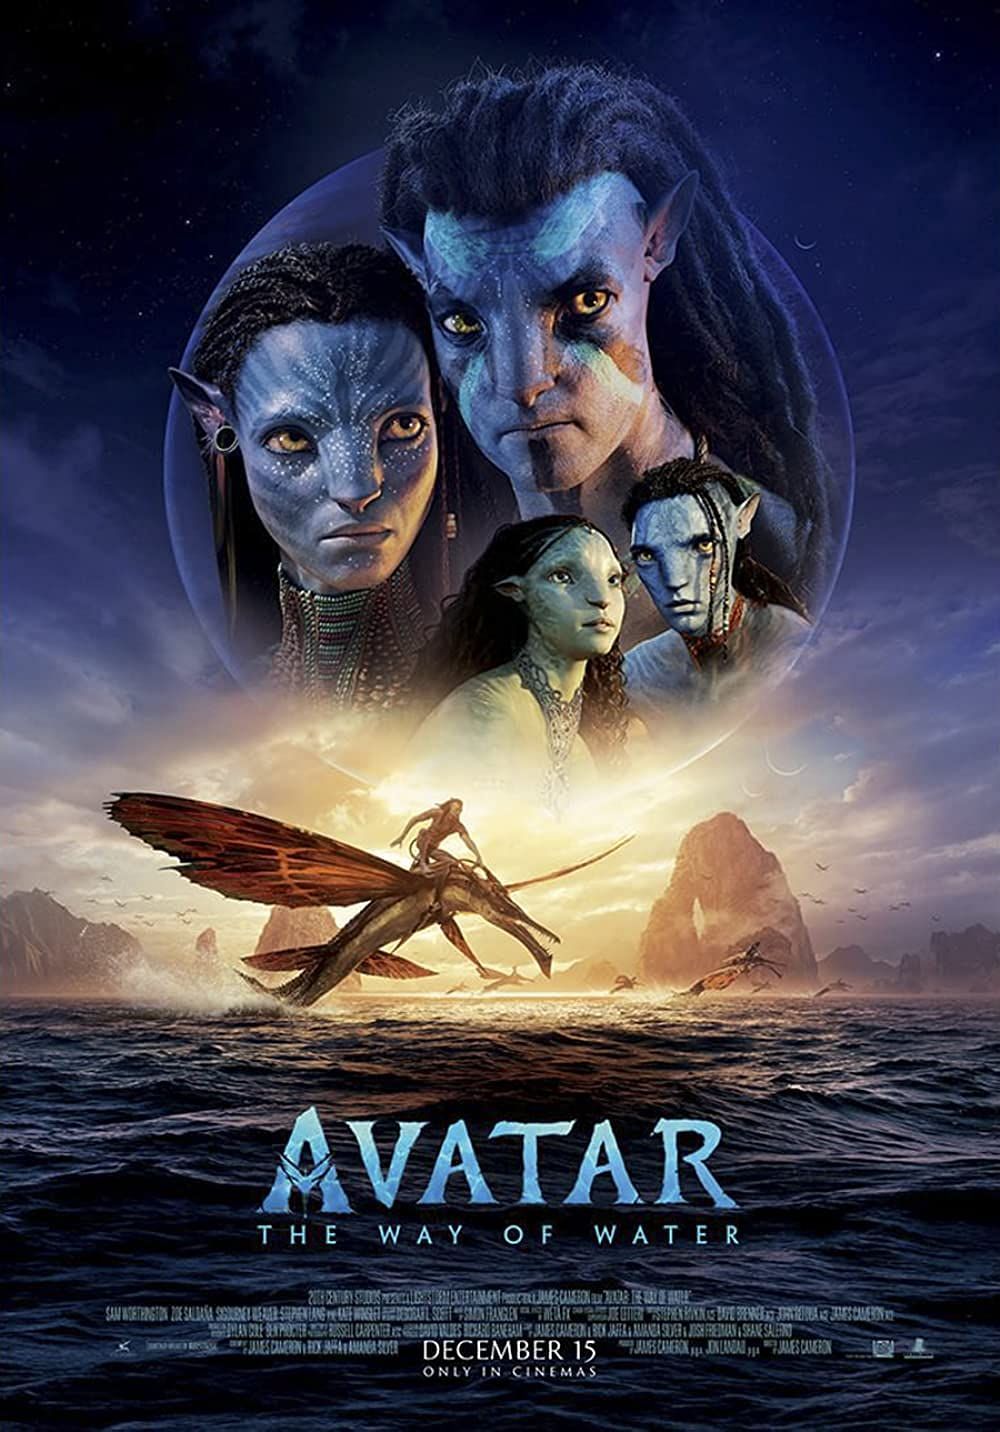 Avatar: The Way Of Water poster (Image via IMDB)